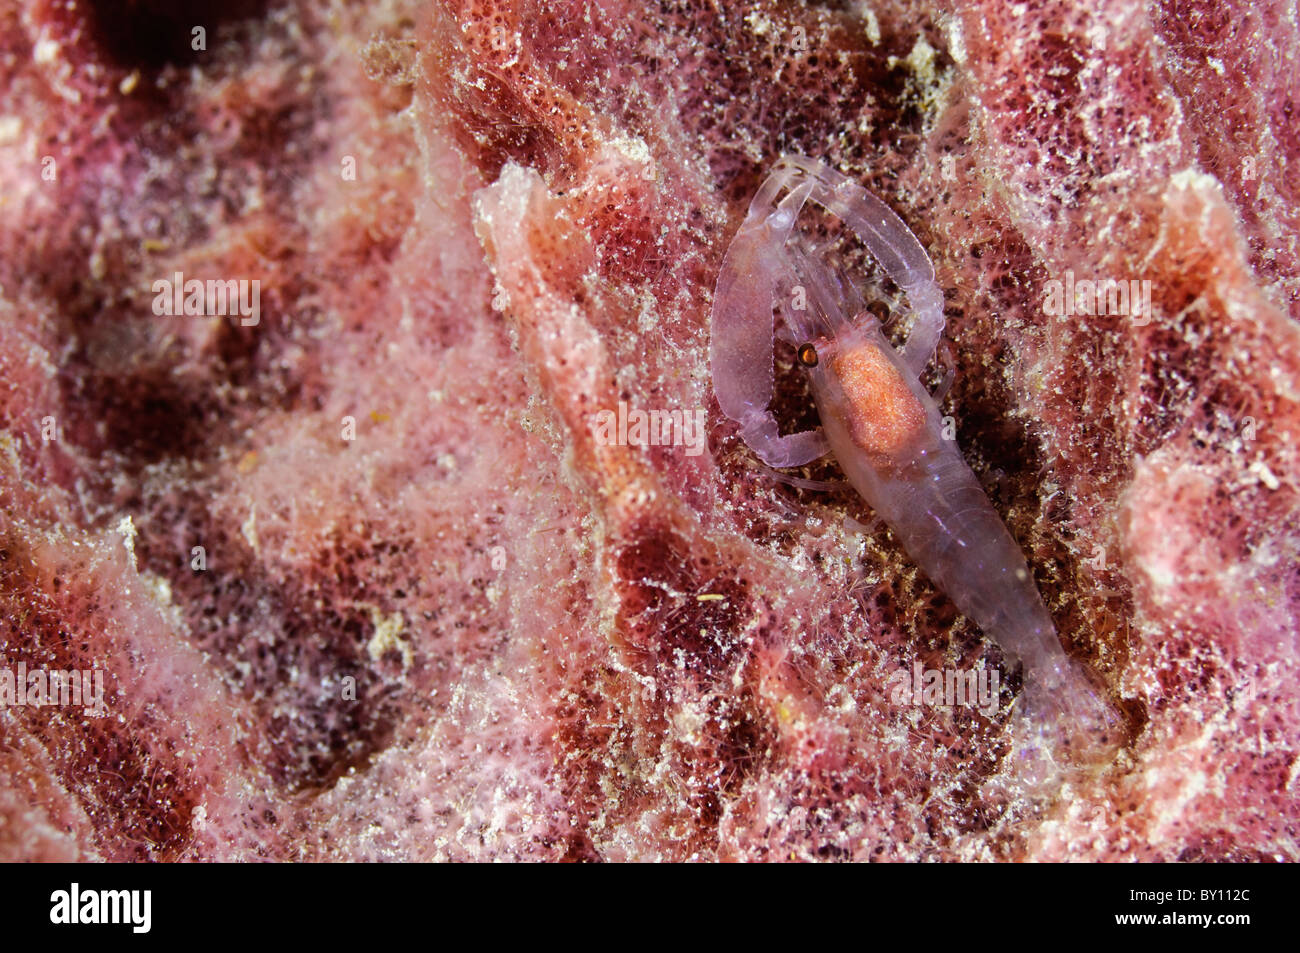 Pistol or snapping shrimp on a barrel sponge, Manokwari, West Papua, Indonesia. Stock Photo